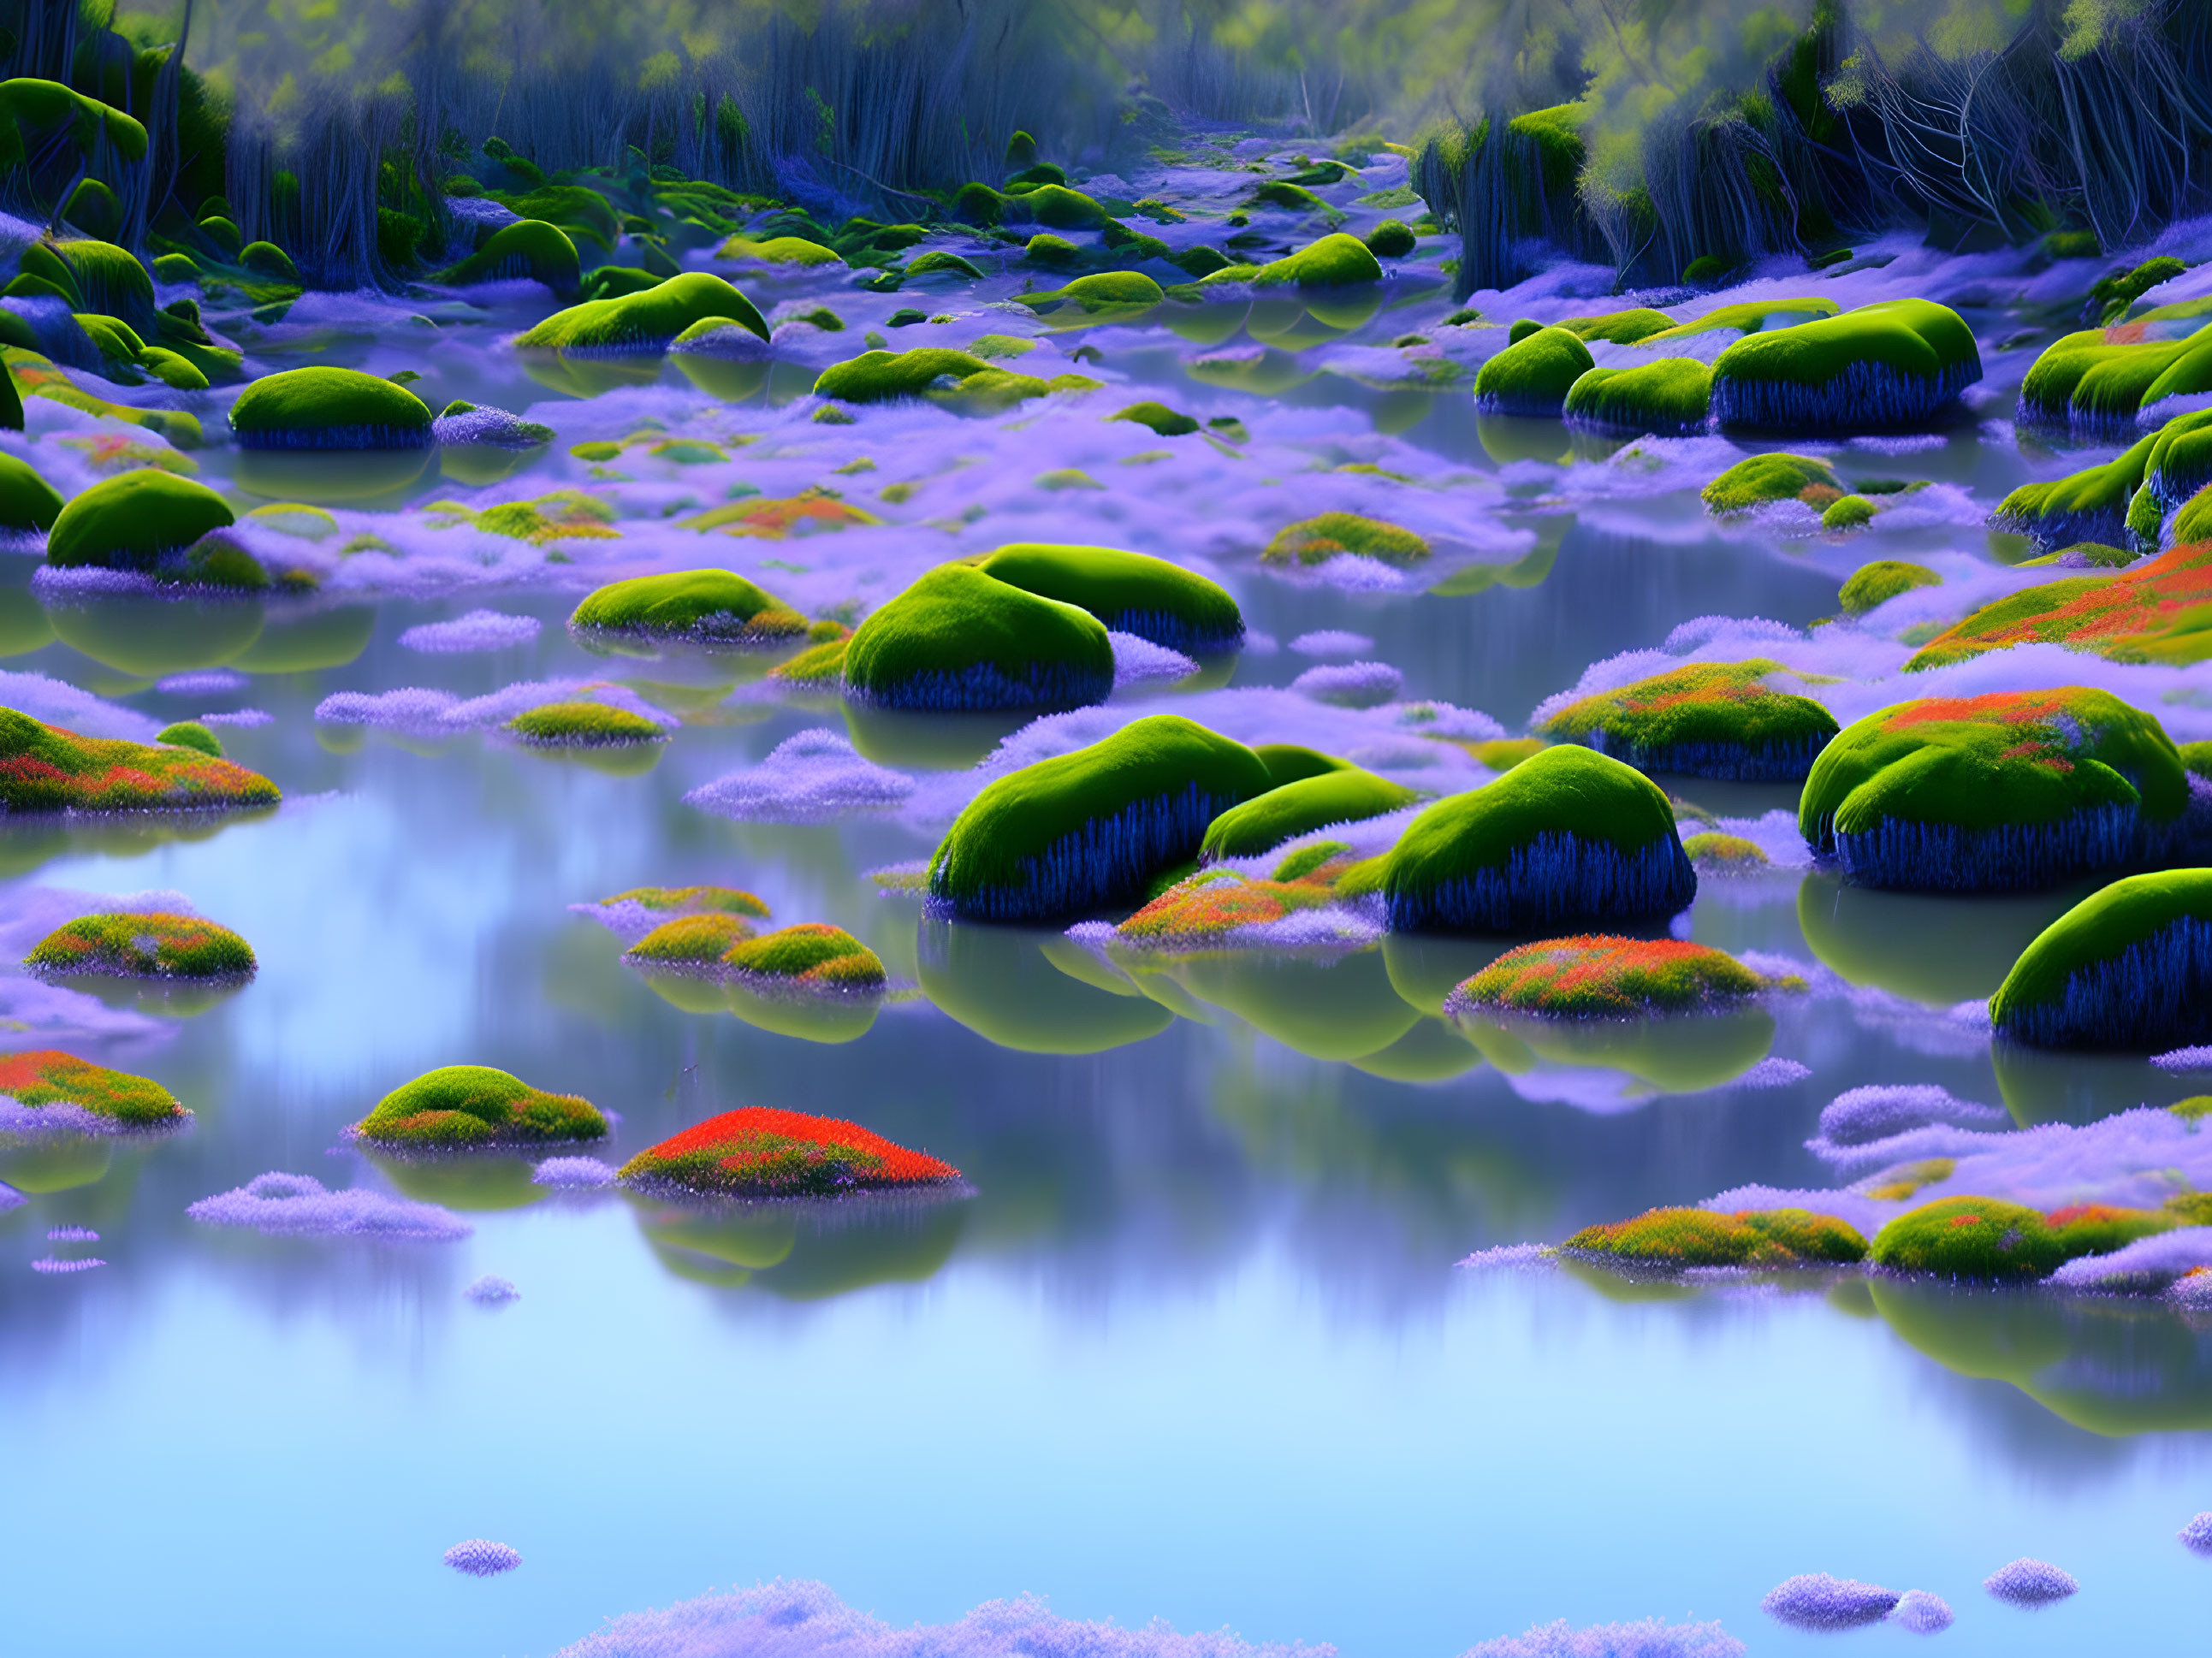 Enchanted Oasis: Mossy Rocks & Still Waters